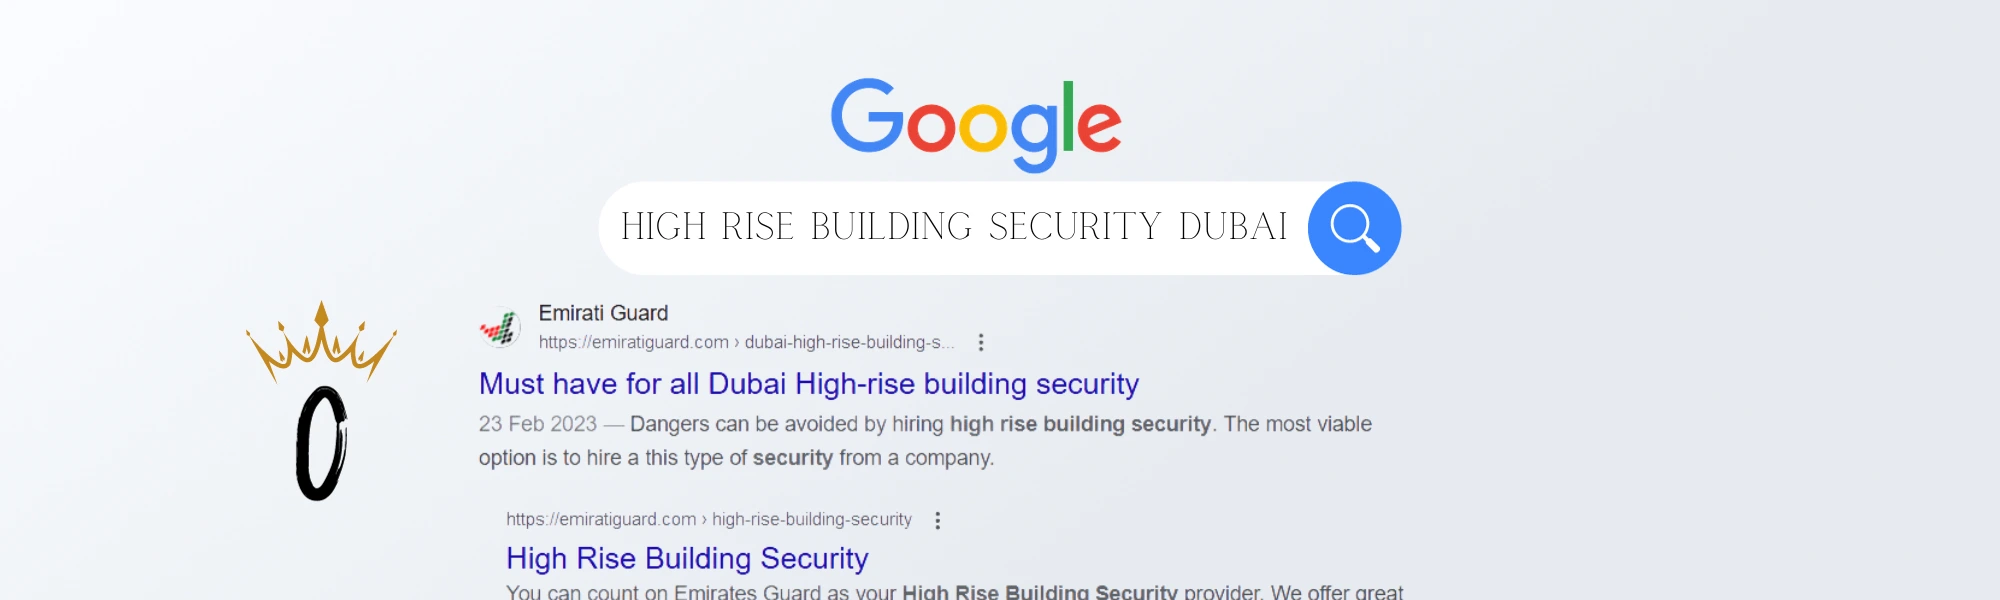 high rise building security dubai